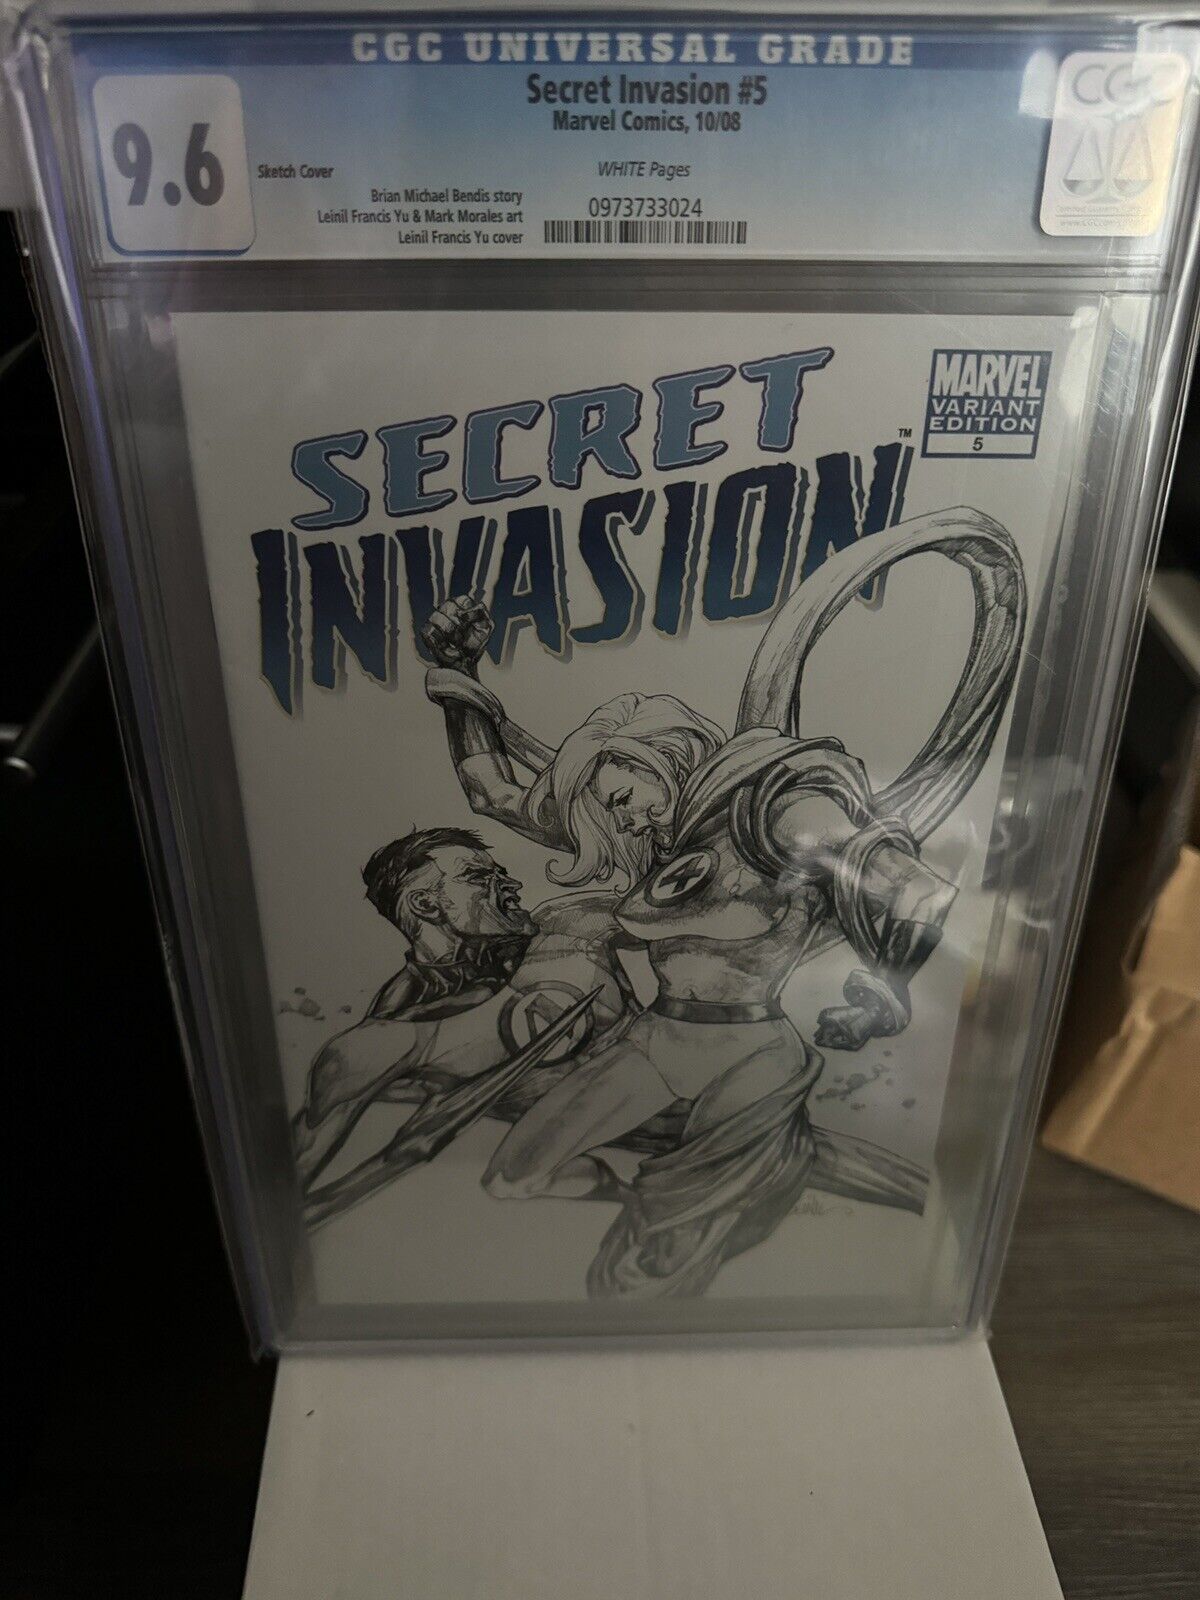 SECRET INVASION #5 SKETCH COVER CGC 9.6 - Yu Variant Cover - Marvel Comics